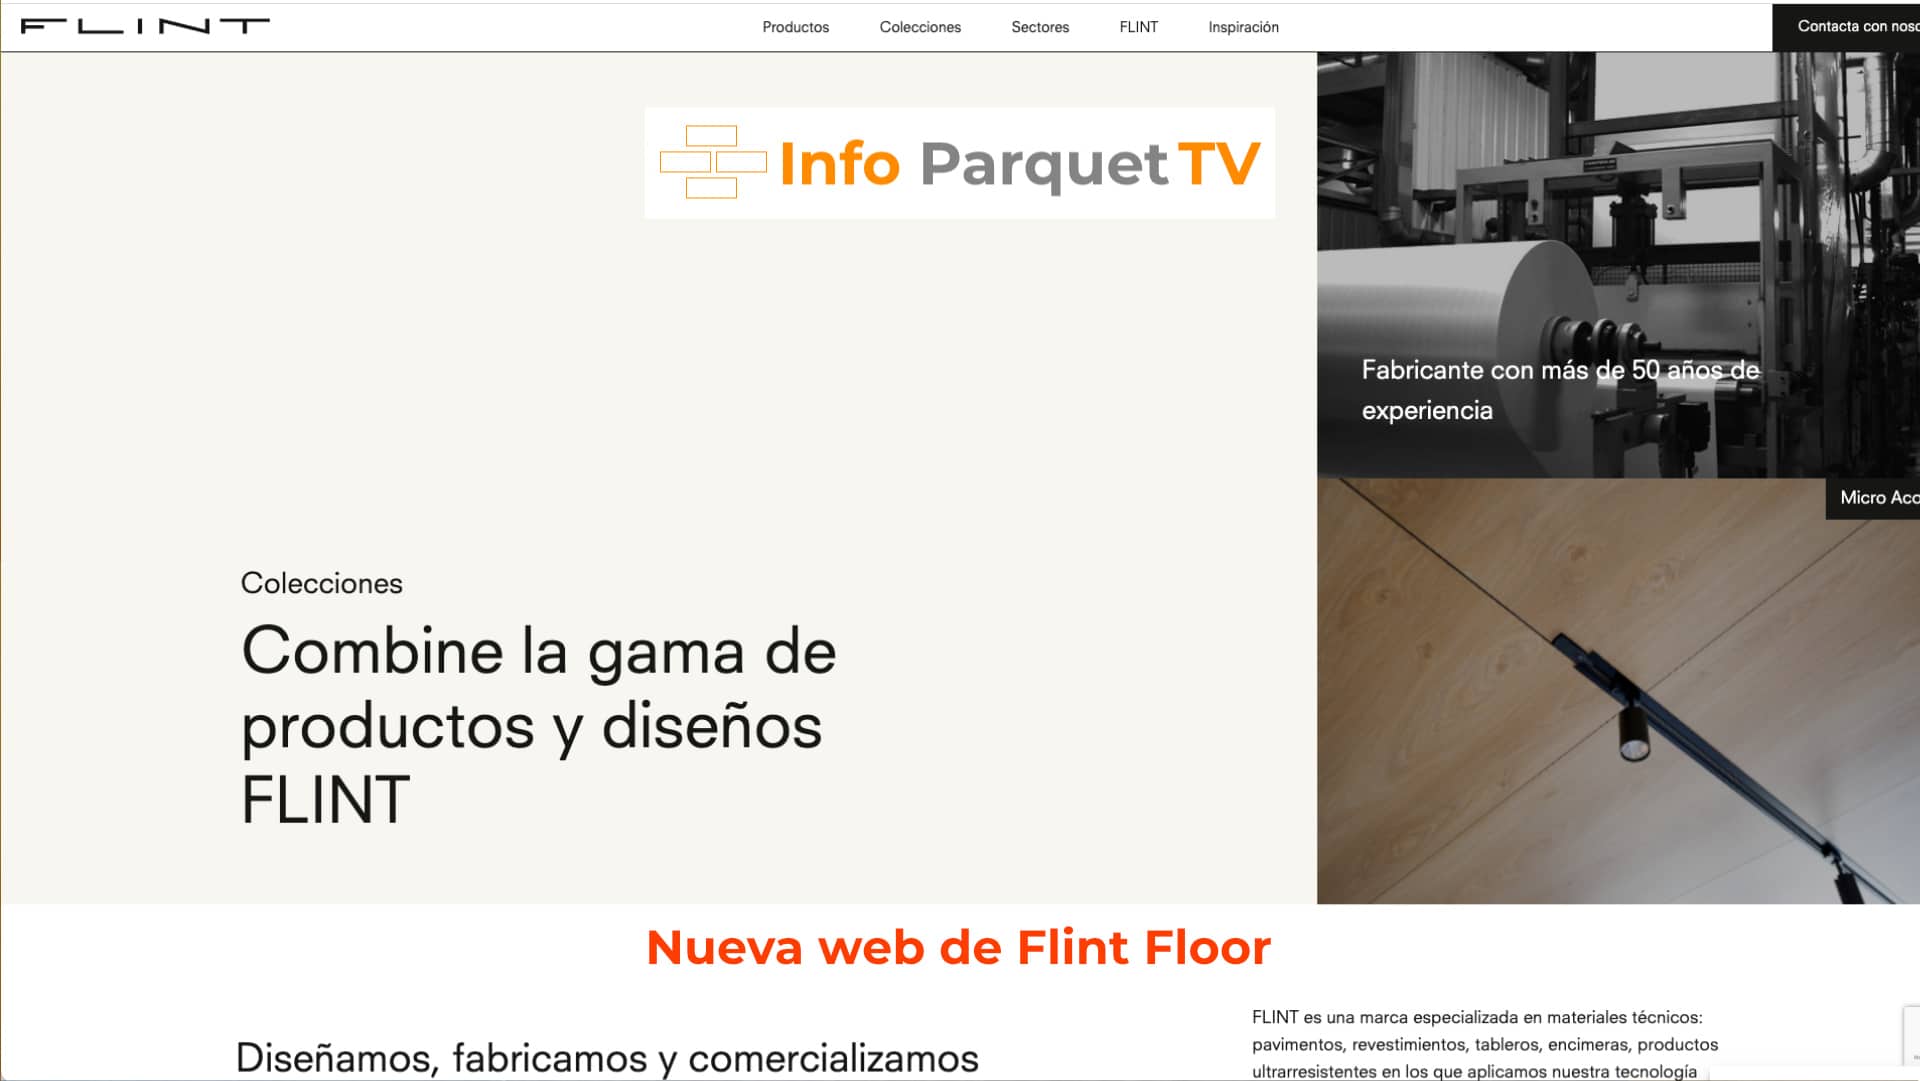 Nueva web de Flint Floor